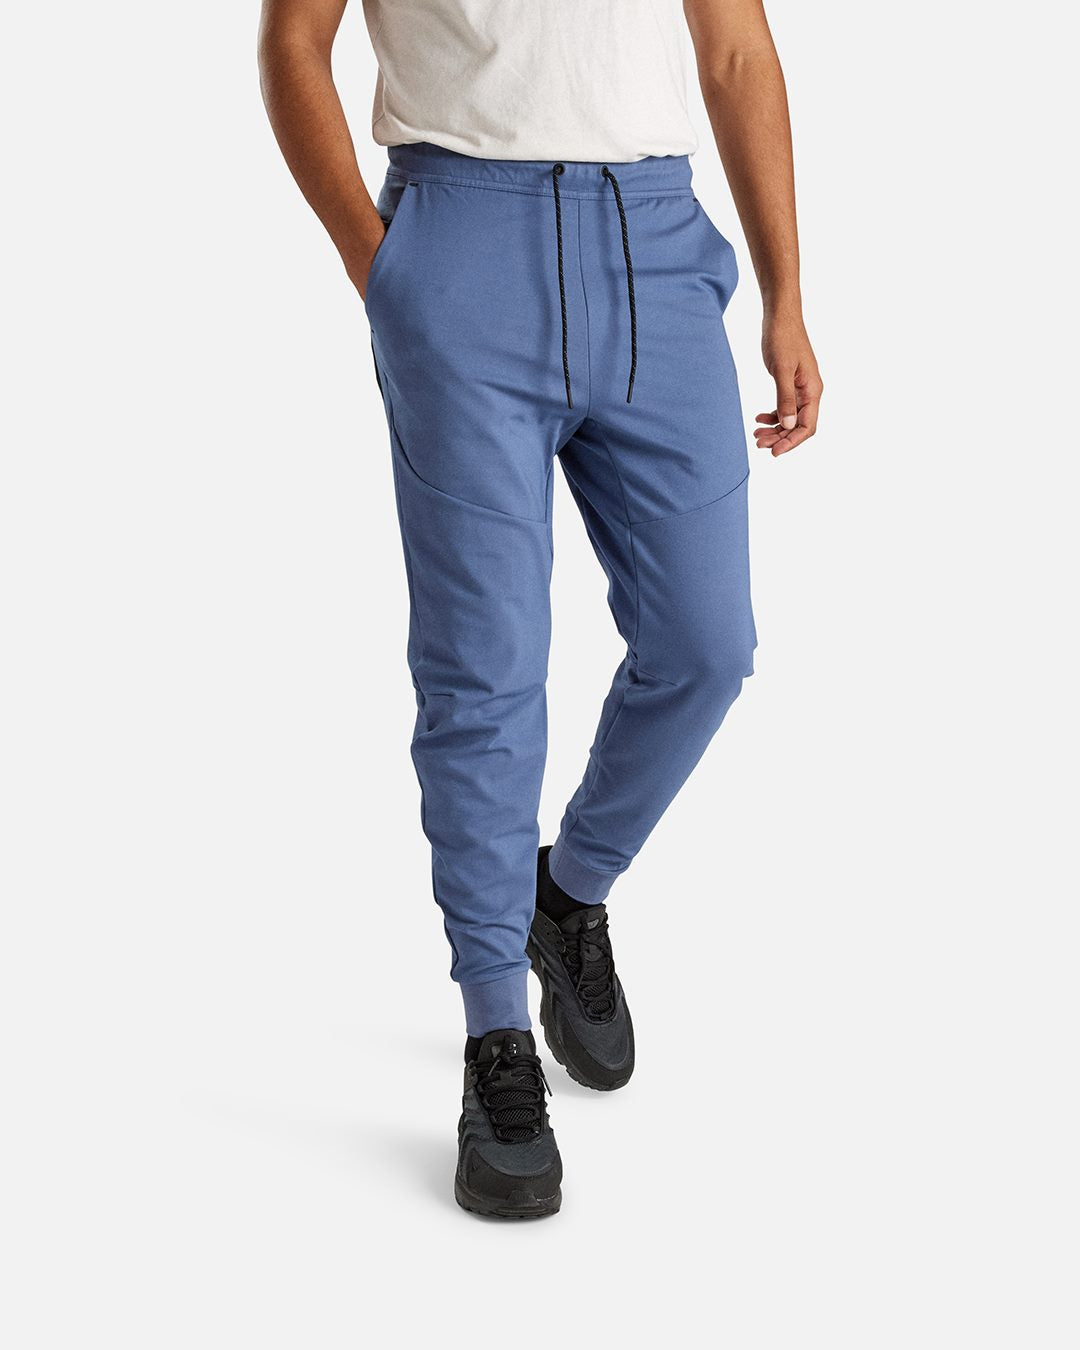 Pantaloni leggeri Nike Tech Fleece - Blu/Neri